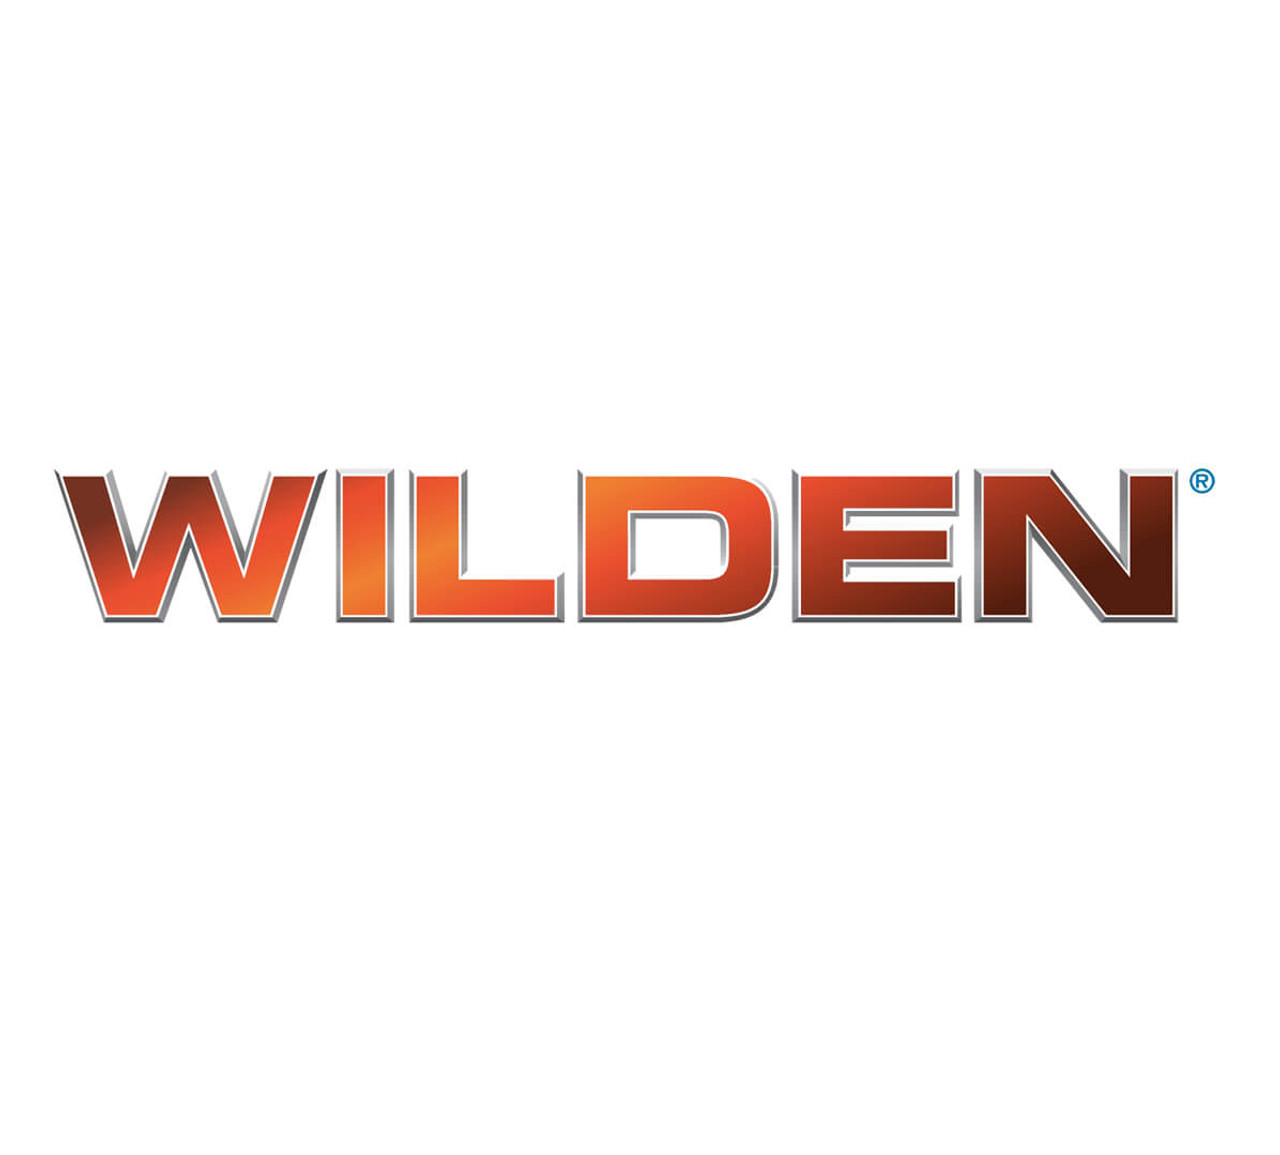 Wilden Wet End Kit 15-9824-55-202